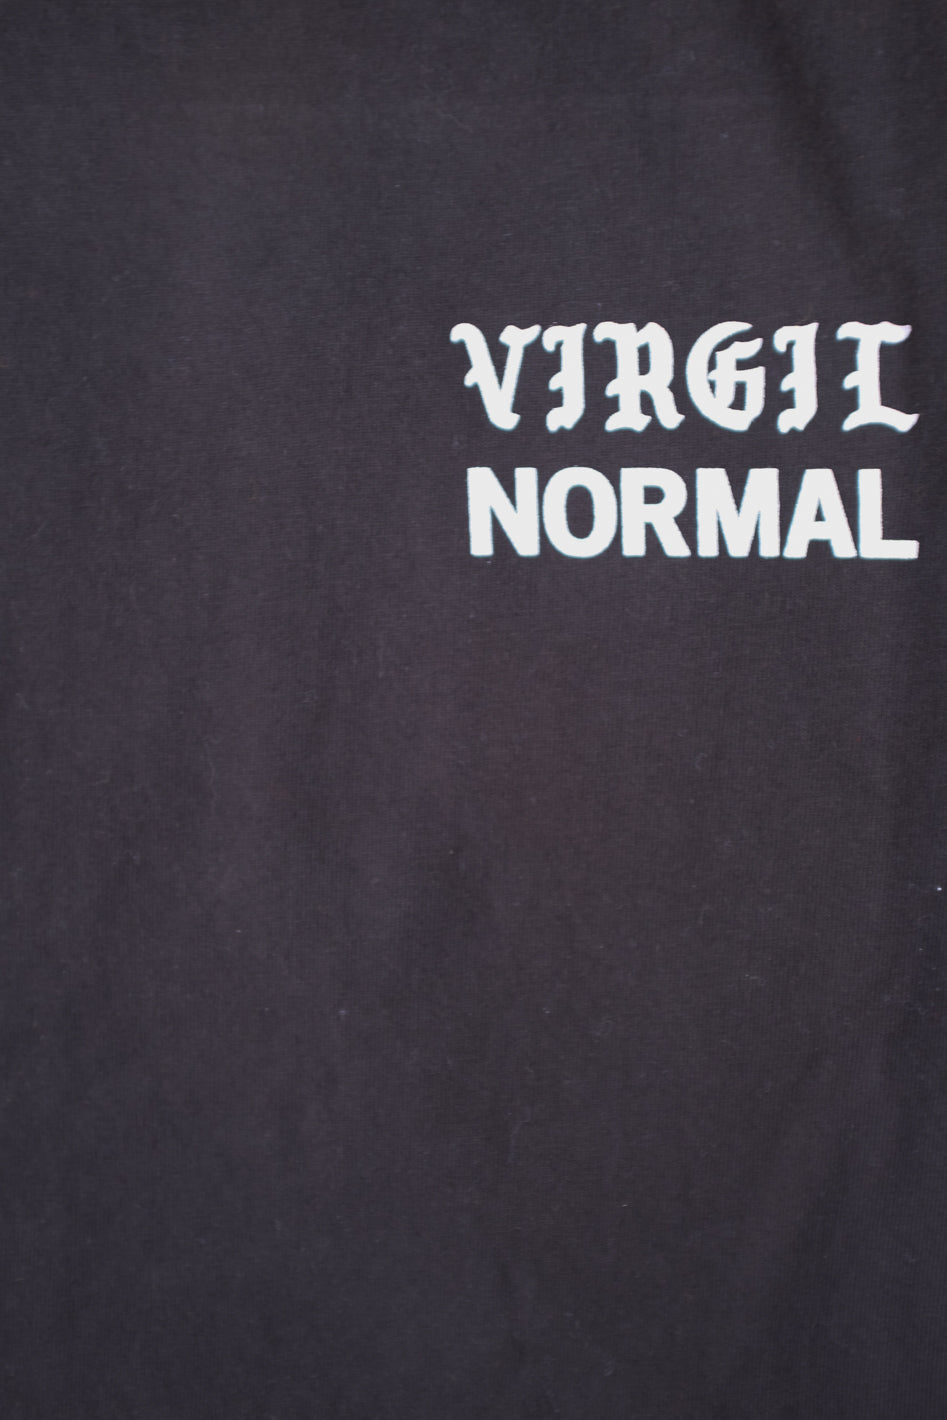 VIRGIL shirt